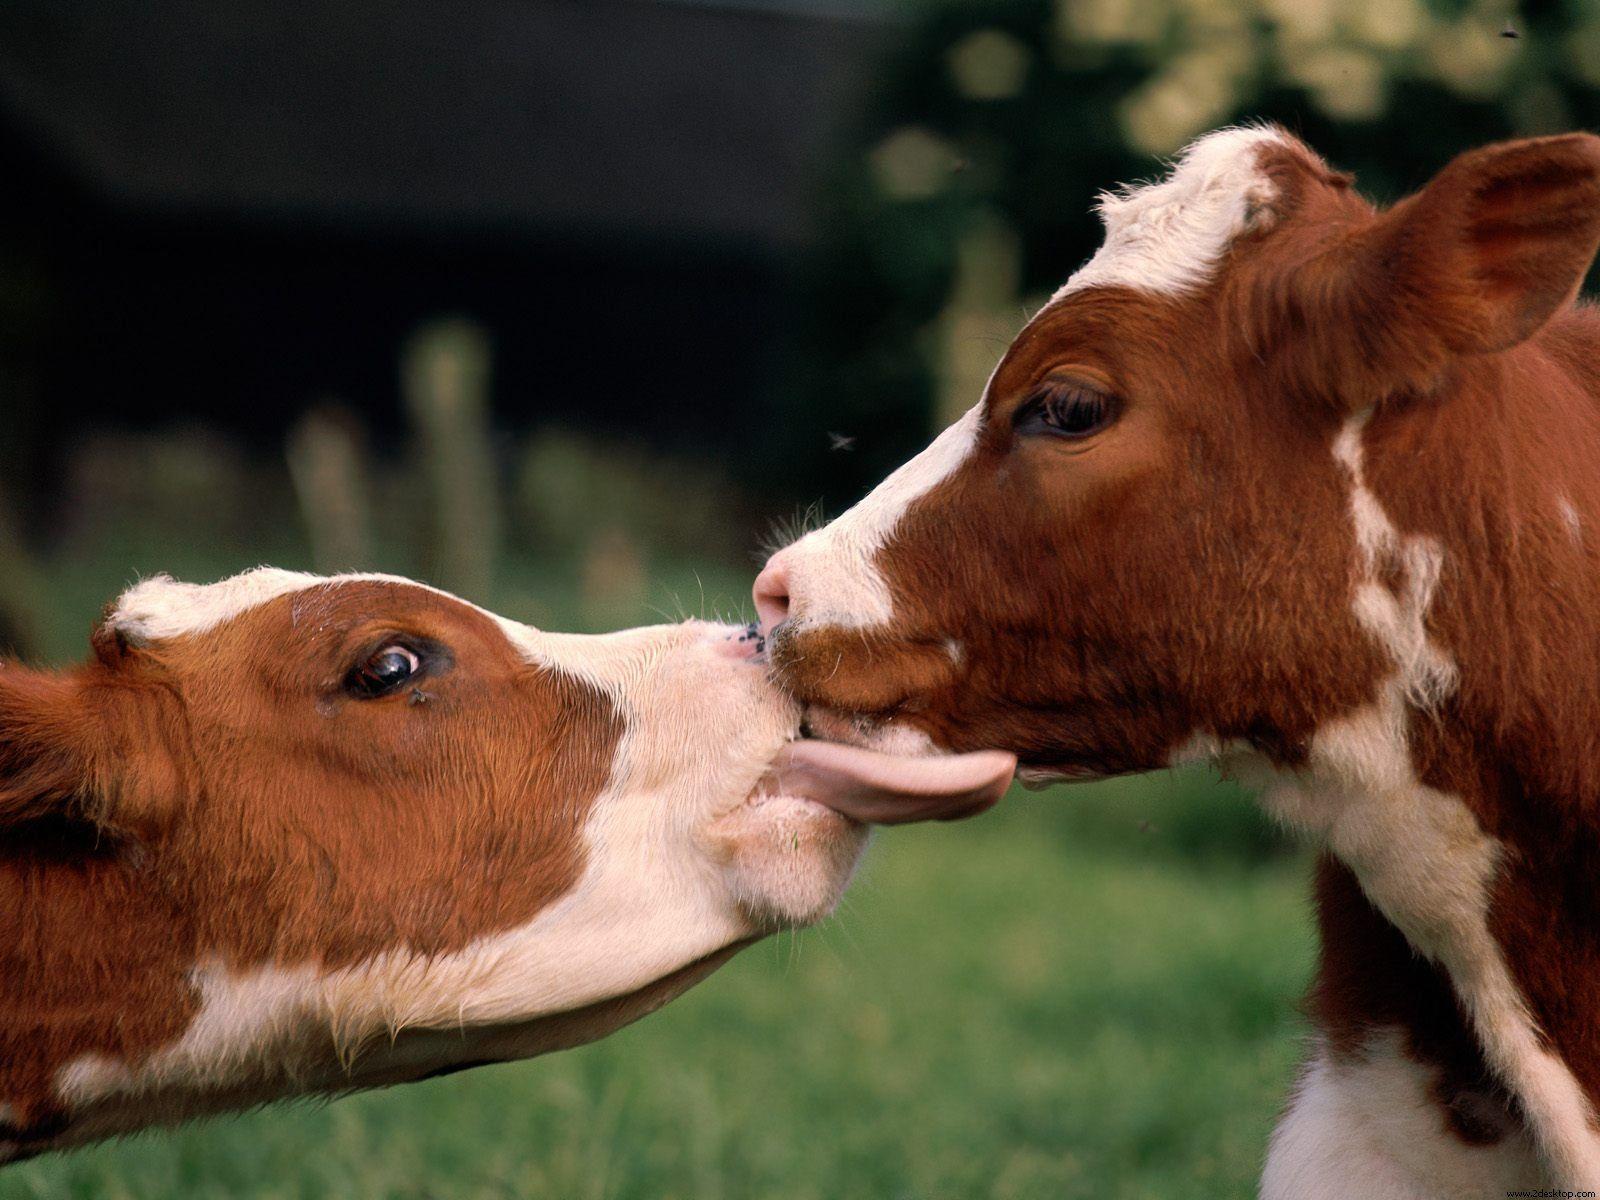 Wallpaper: Cows kissing HD Wallpaper 514 - Cow Animal